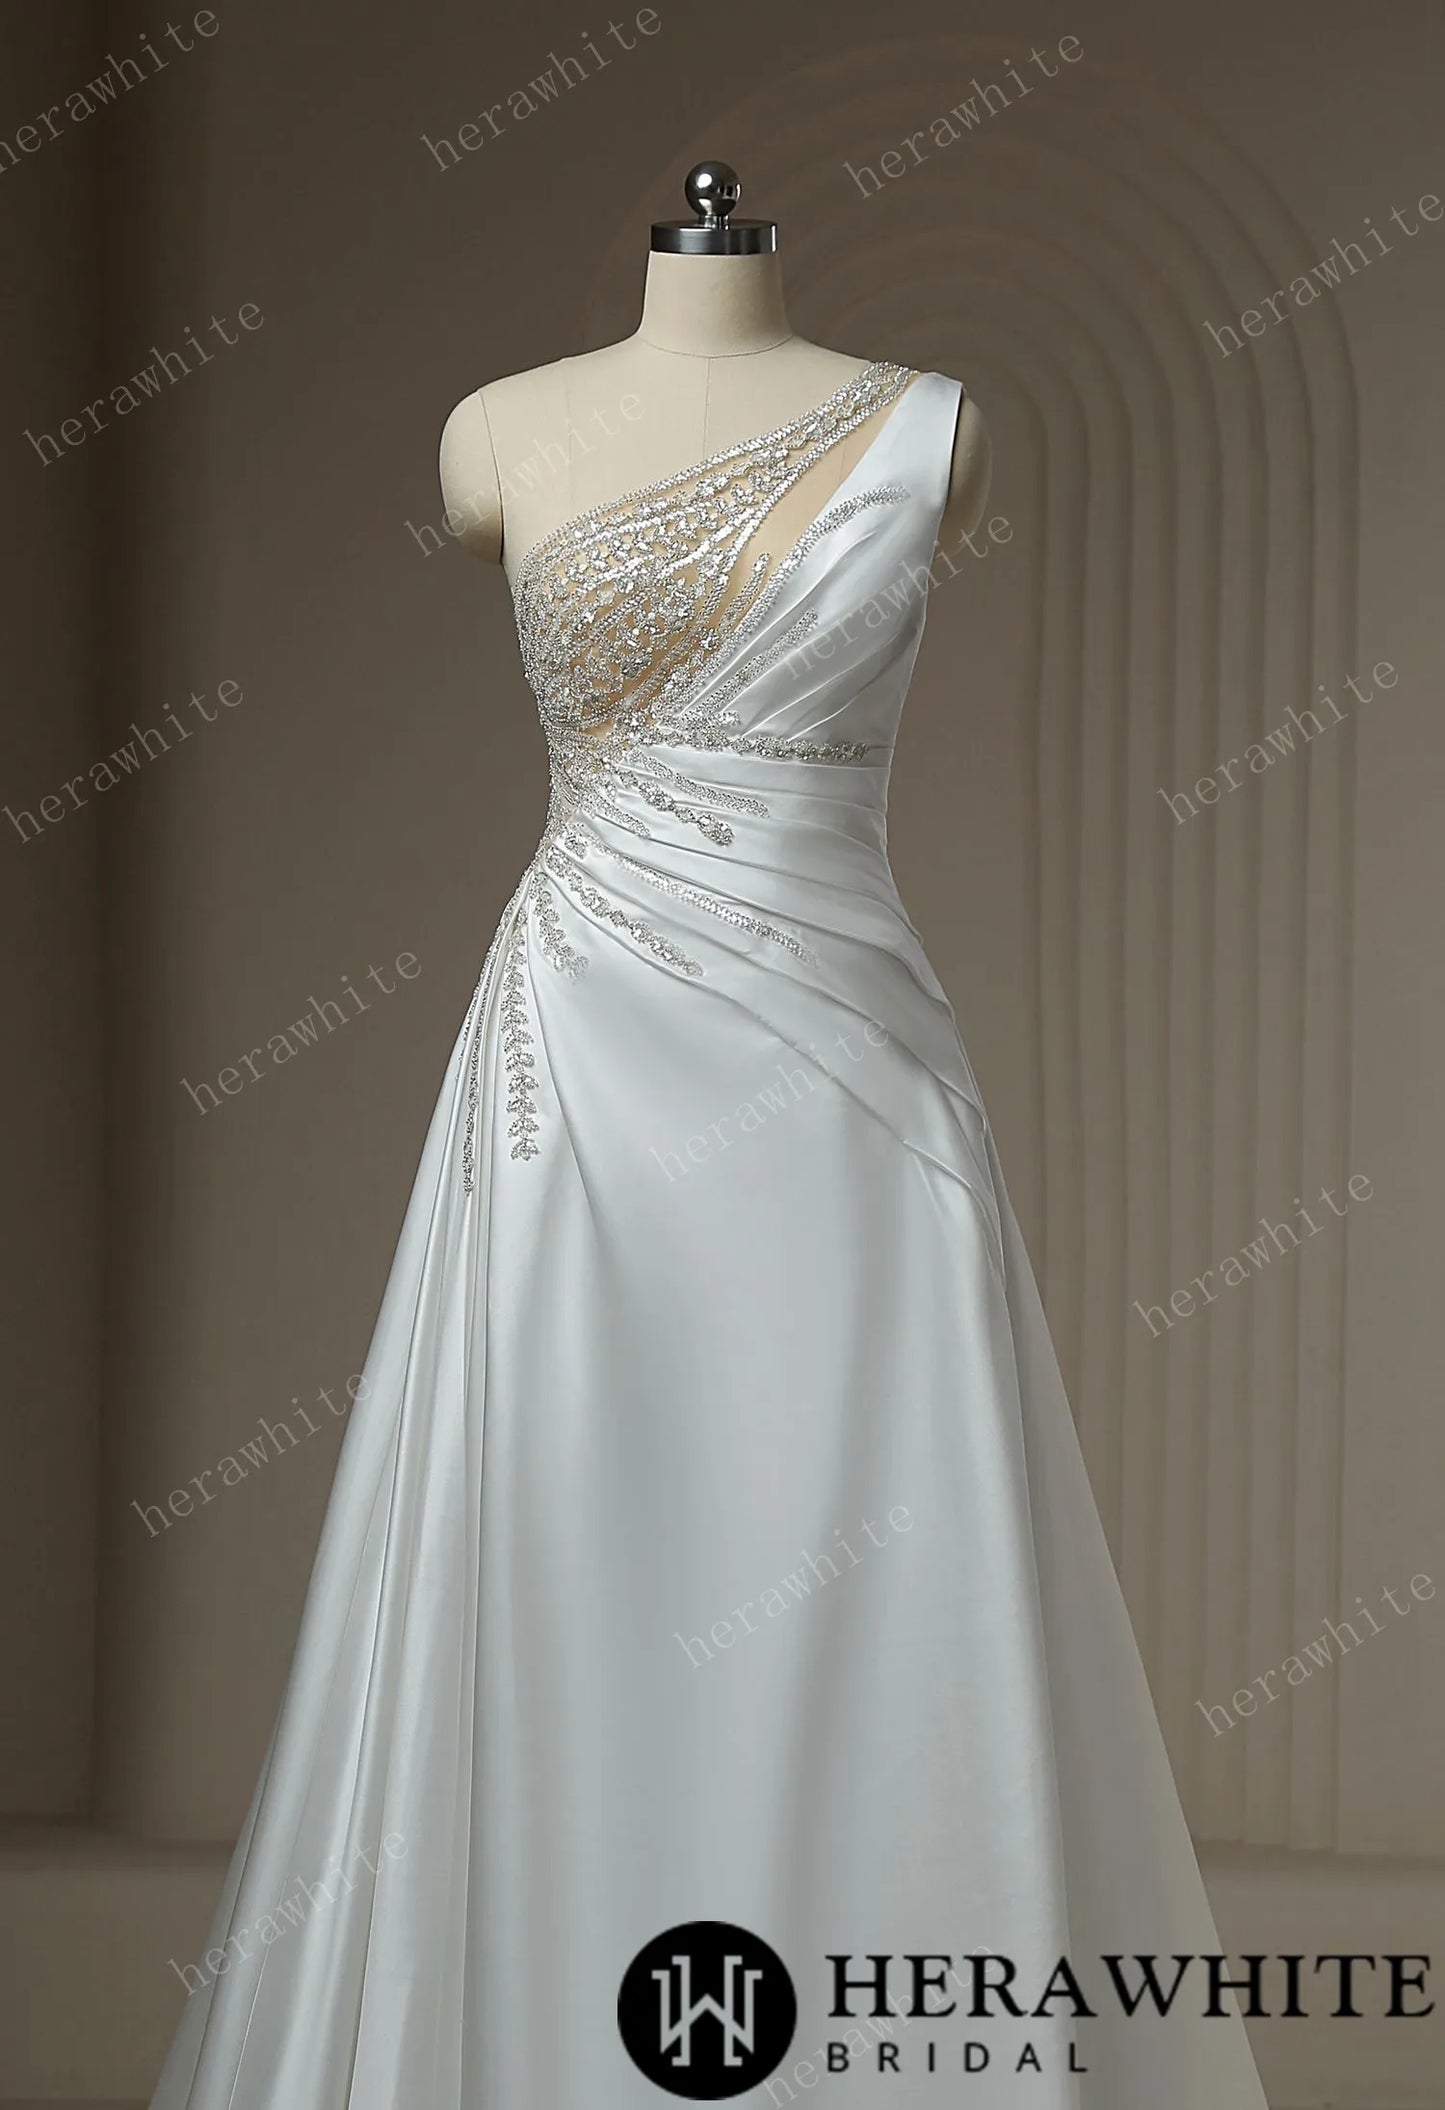 Rhinestone Draped Illusion Back Wedding Dress By HeraWhite